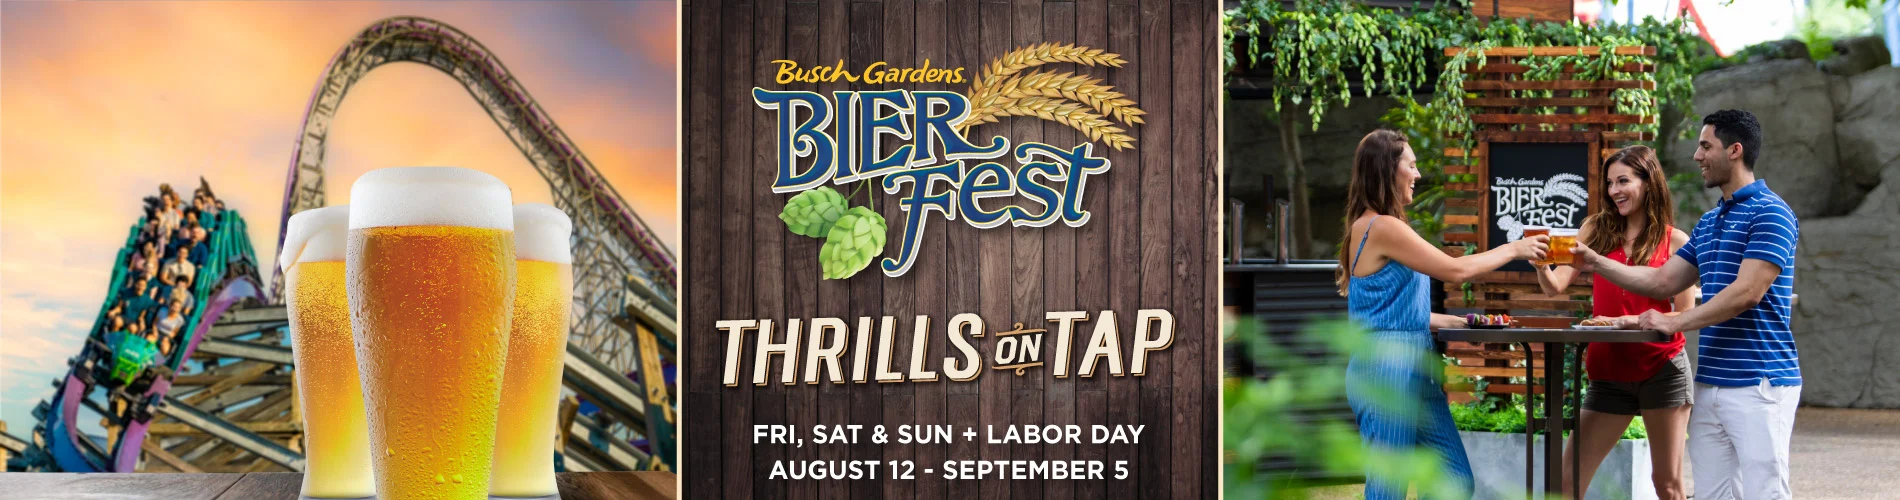 Bier Fest at Busch Gardens Friday, Saturday, and Sundays through September 5